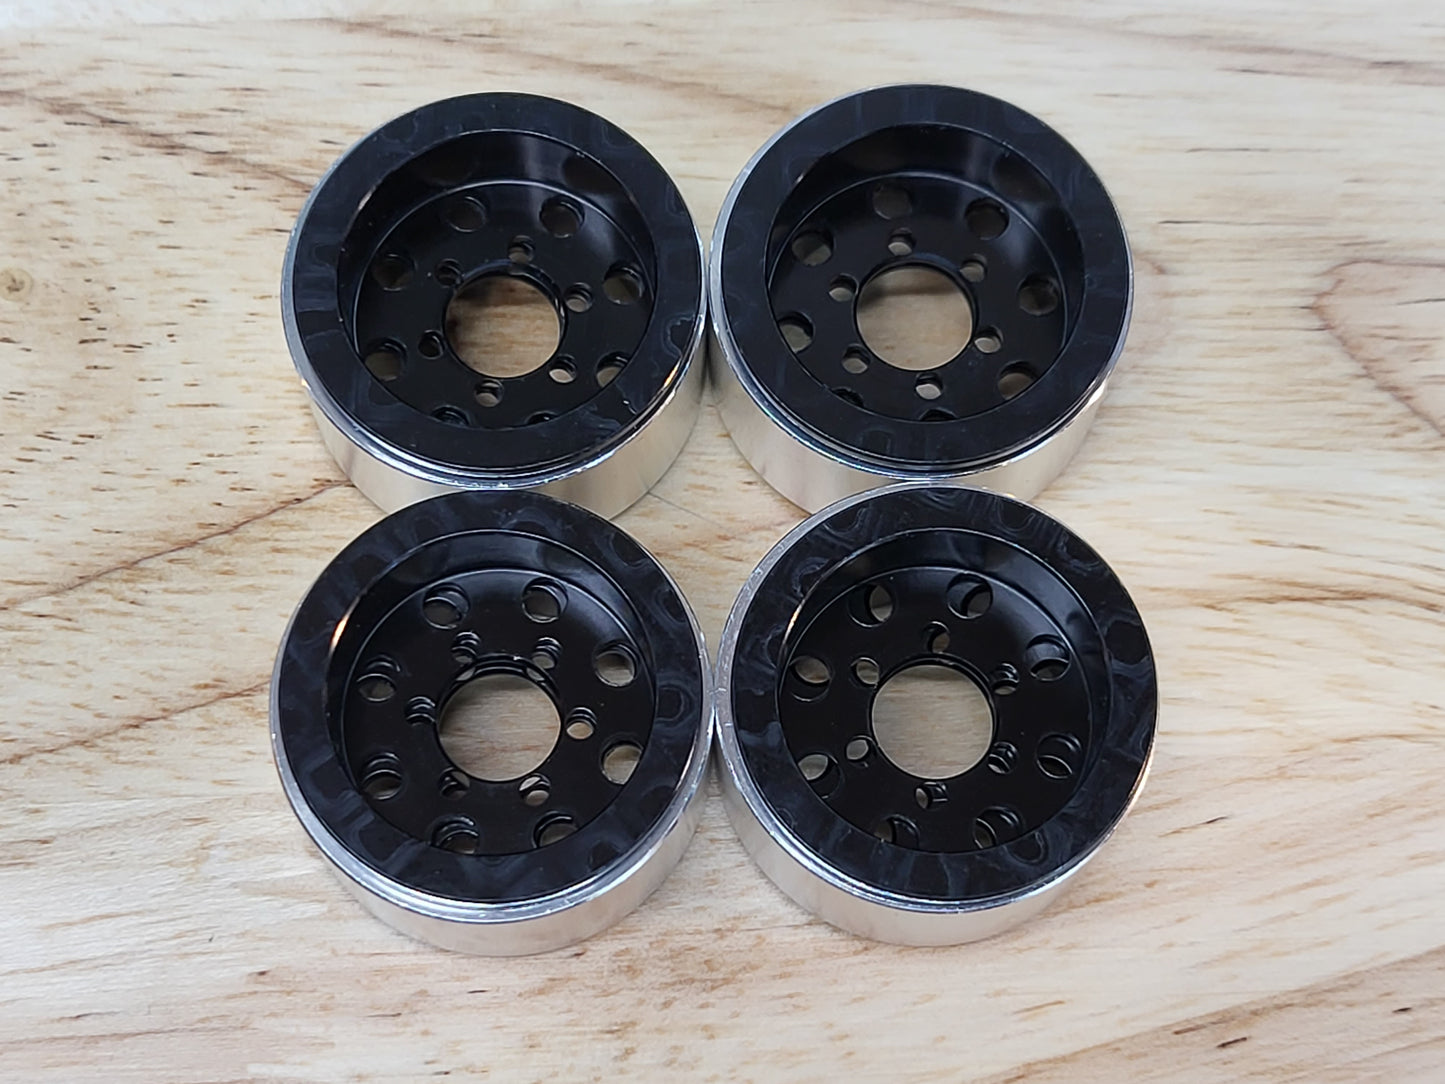 DDP 1.0" inch Beadlock rims / wheels w/ 0mm Hubs